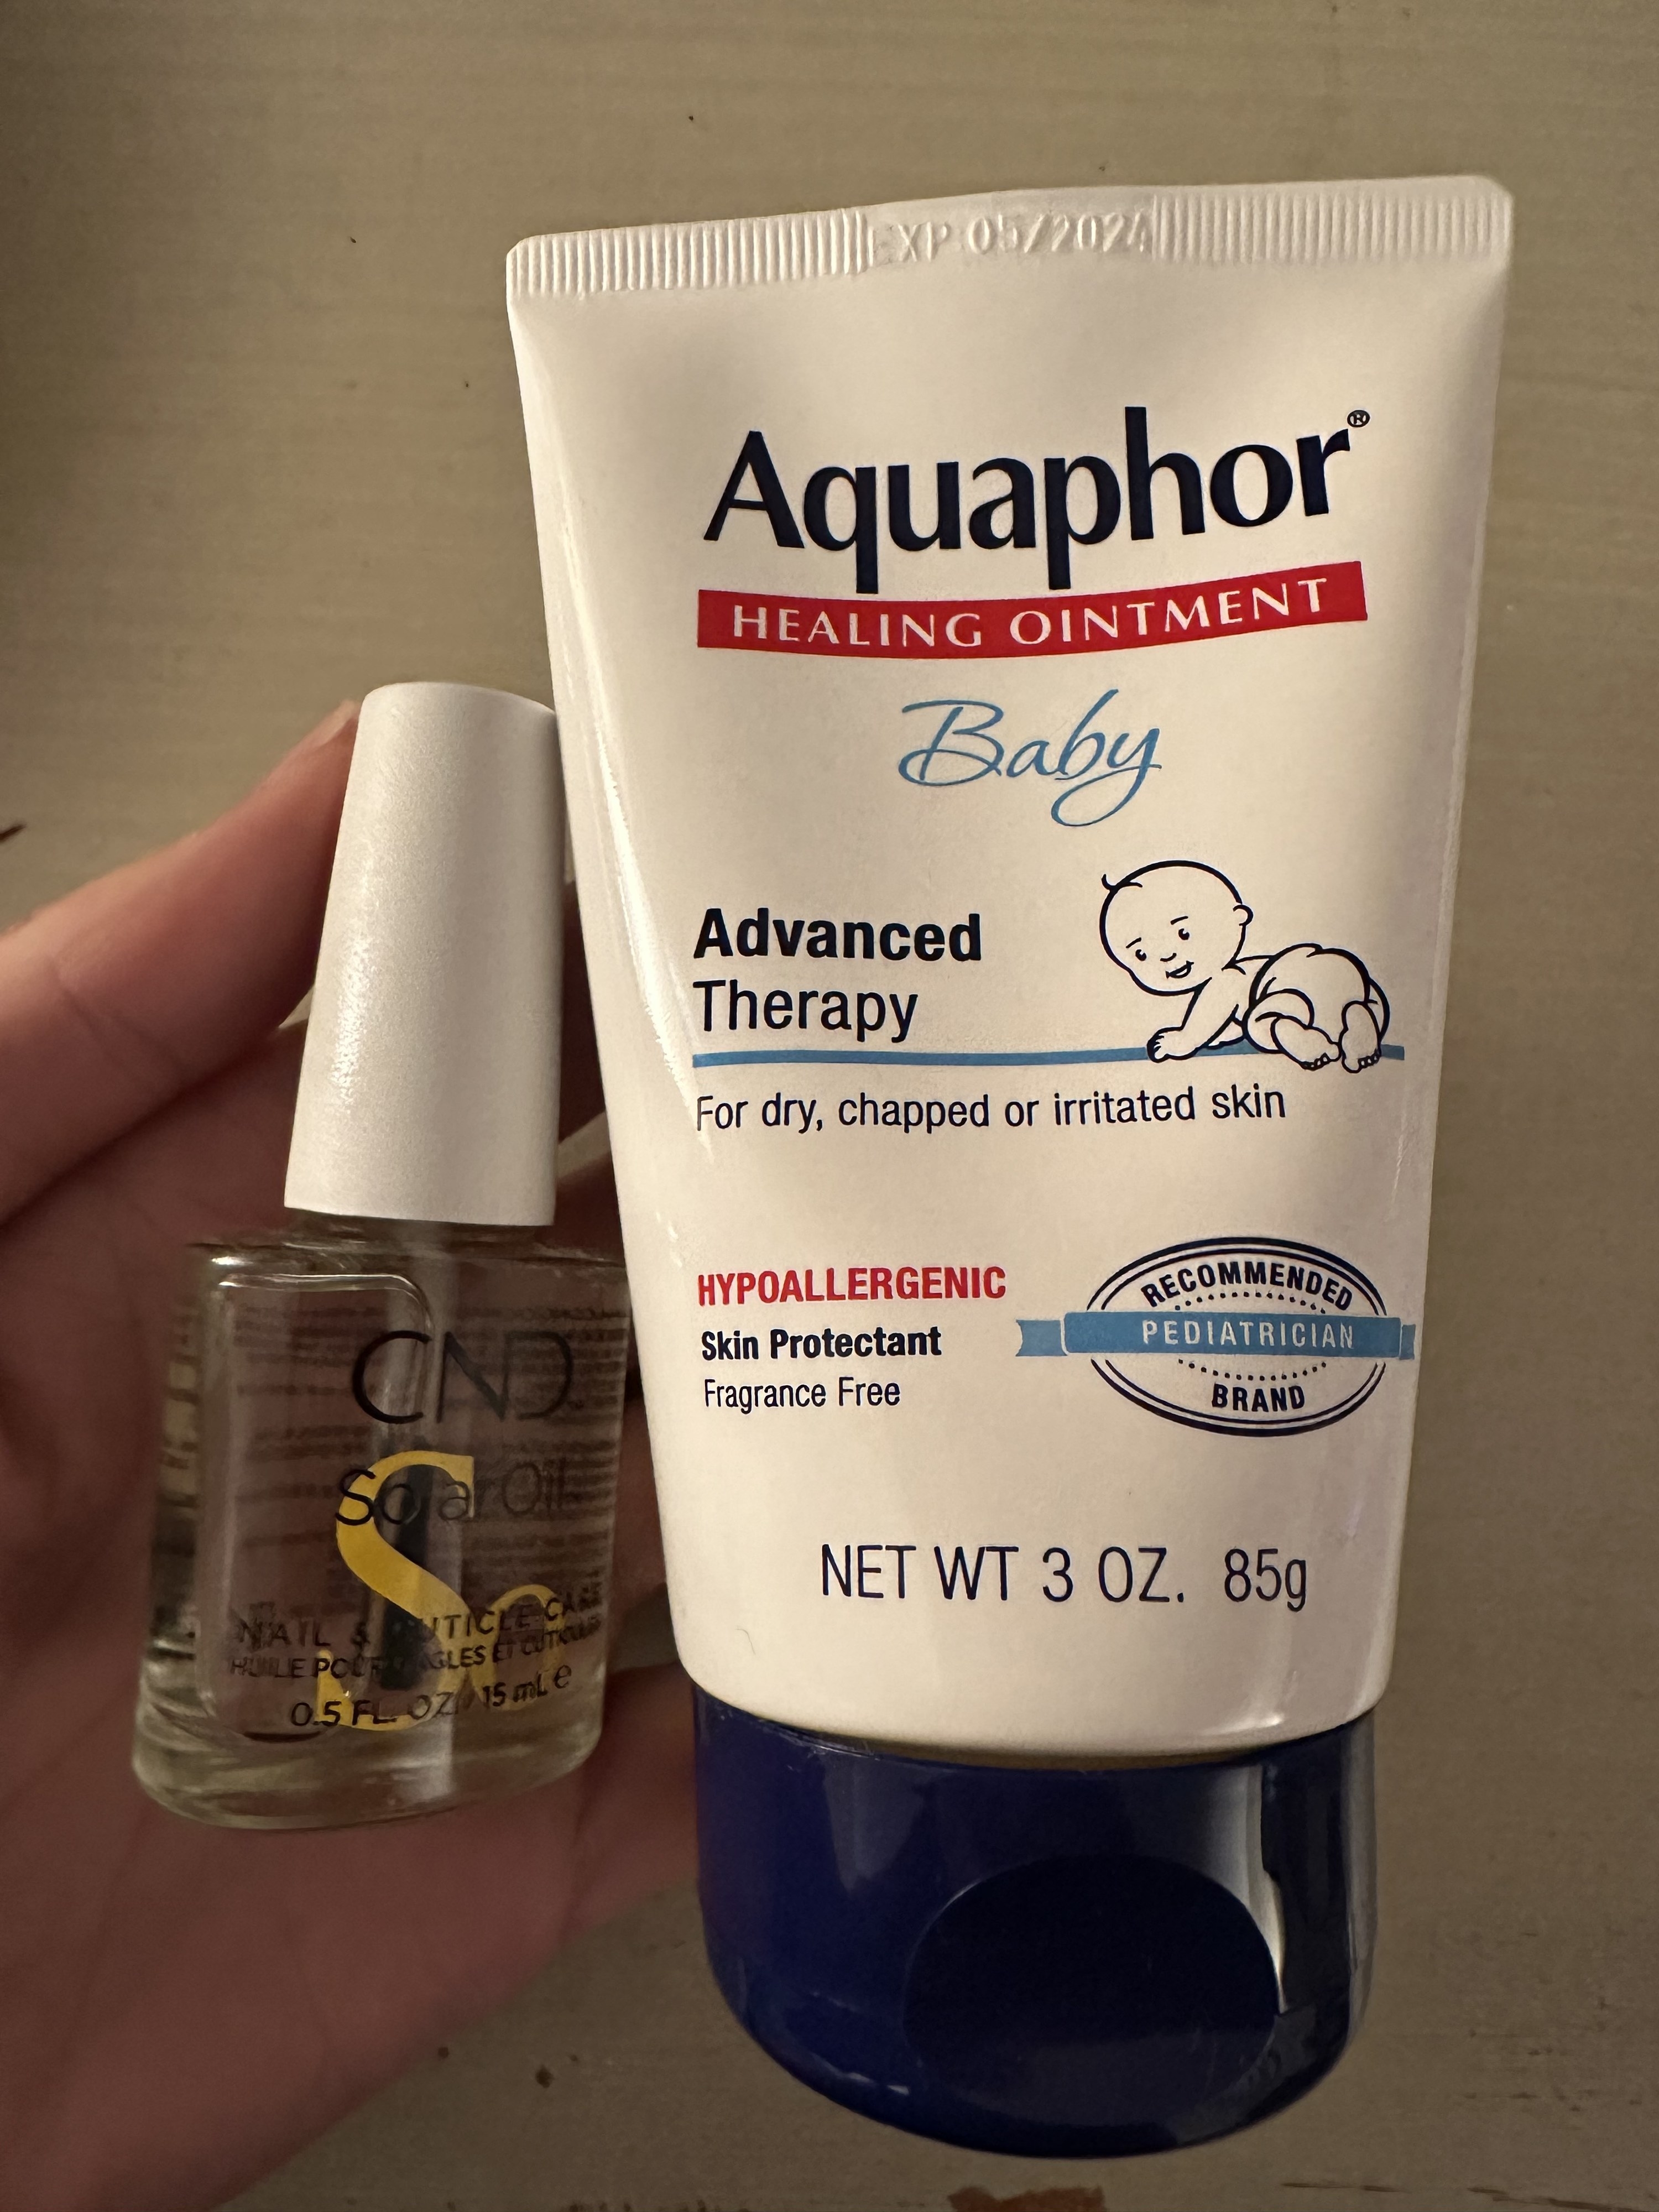 Cuticle oil and Aquaphor